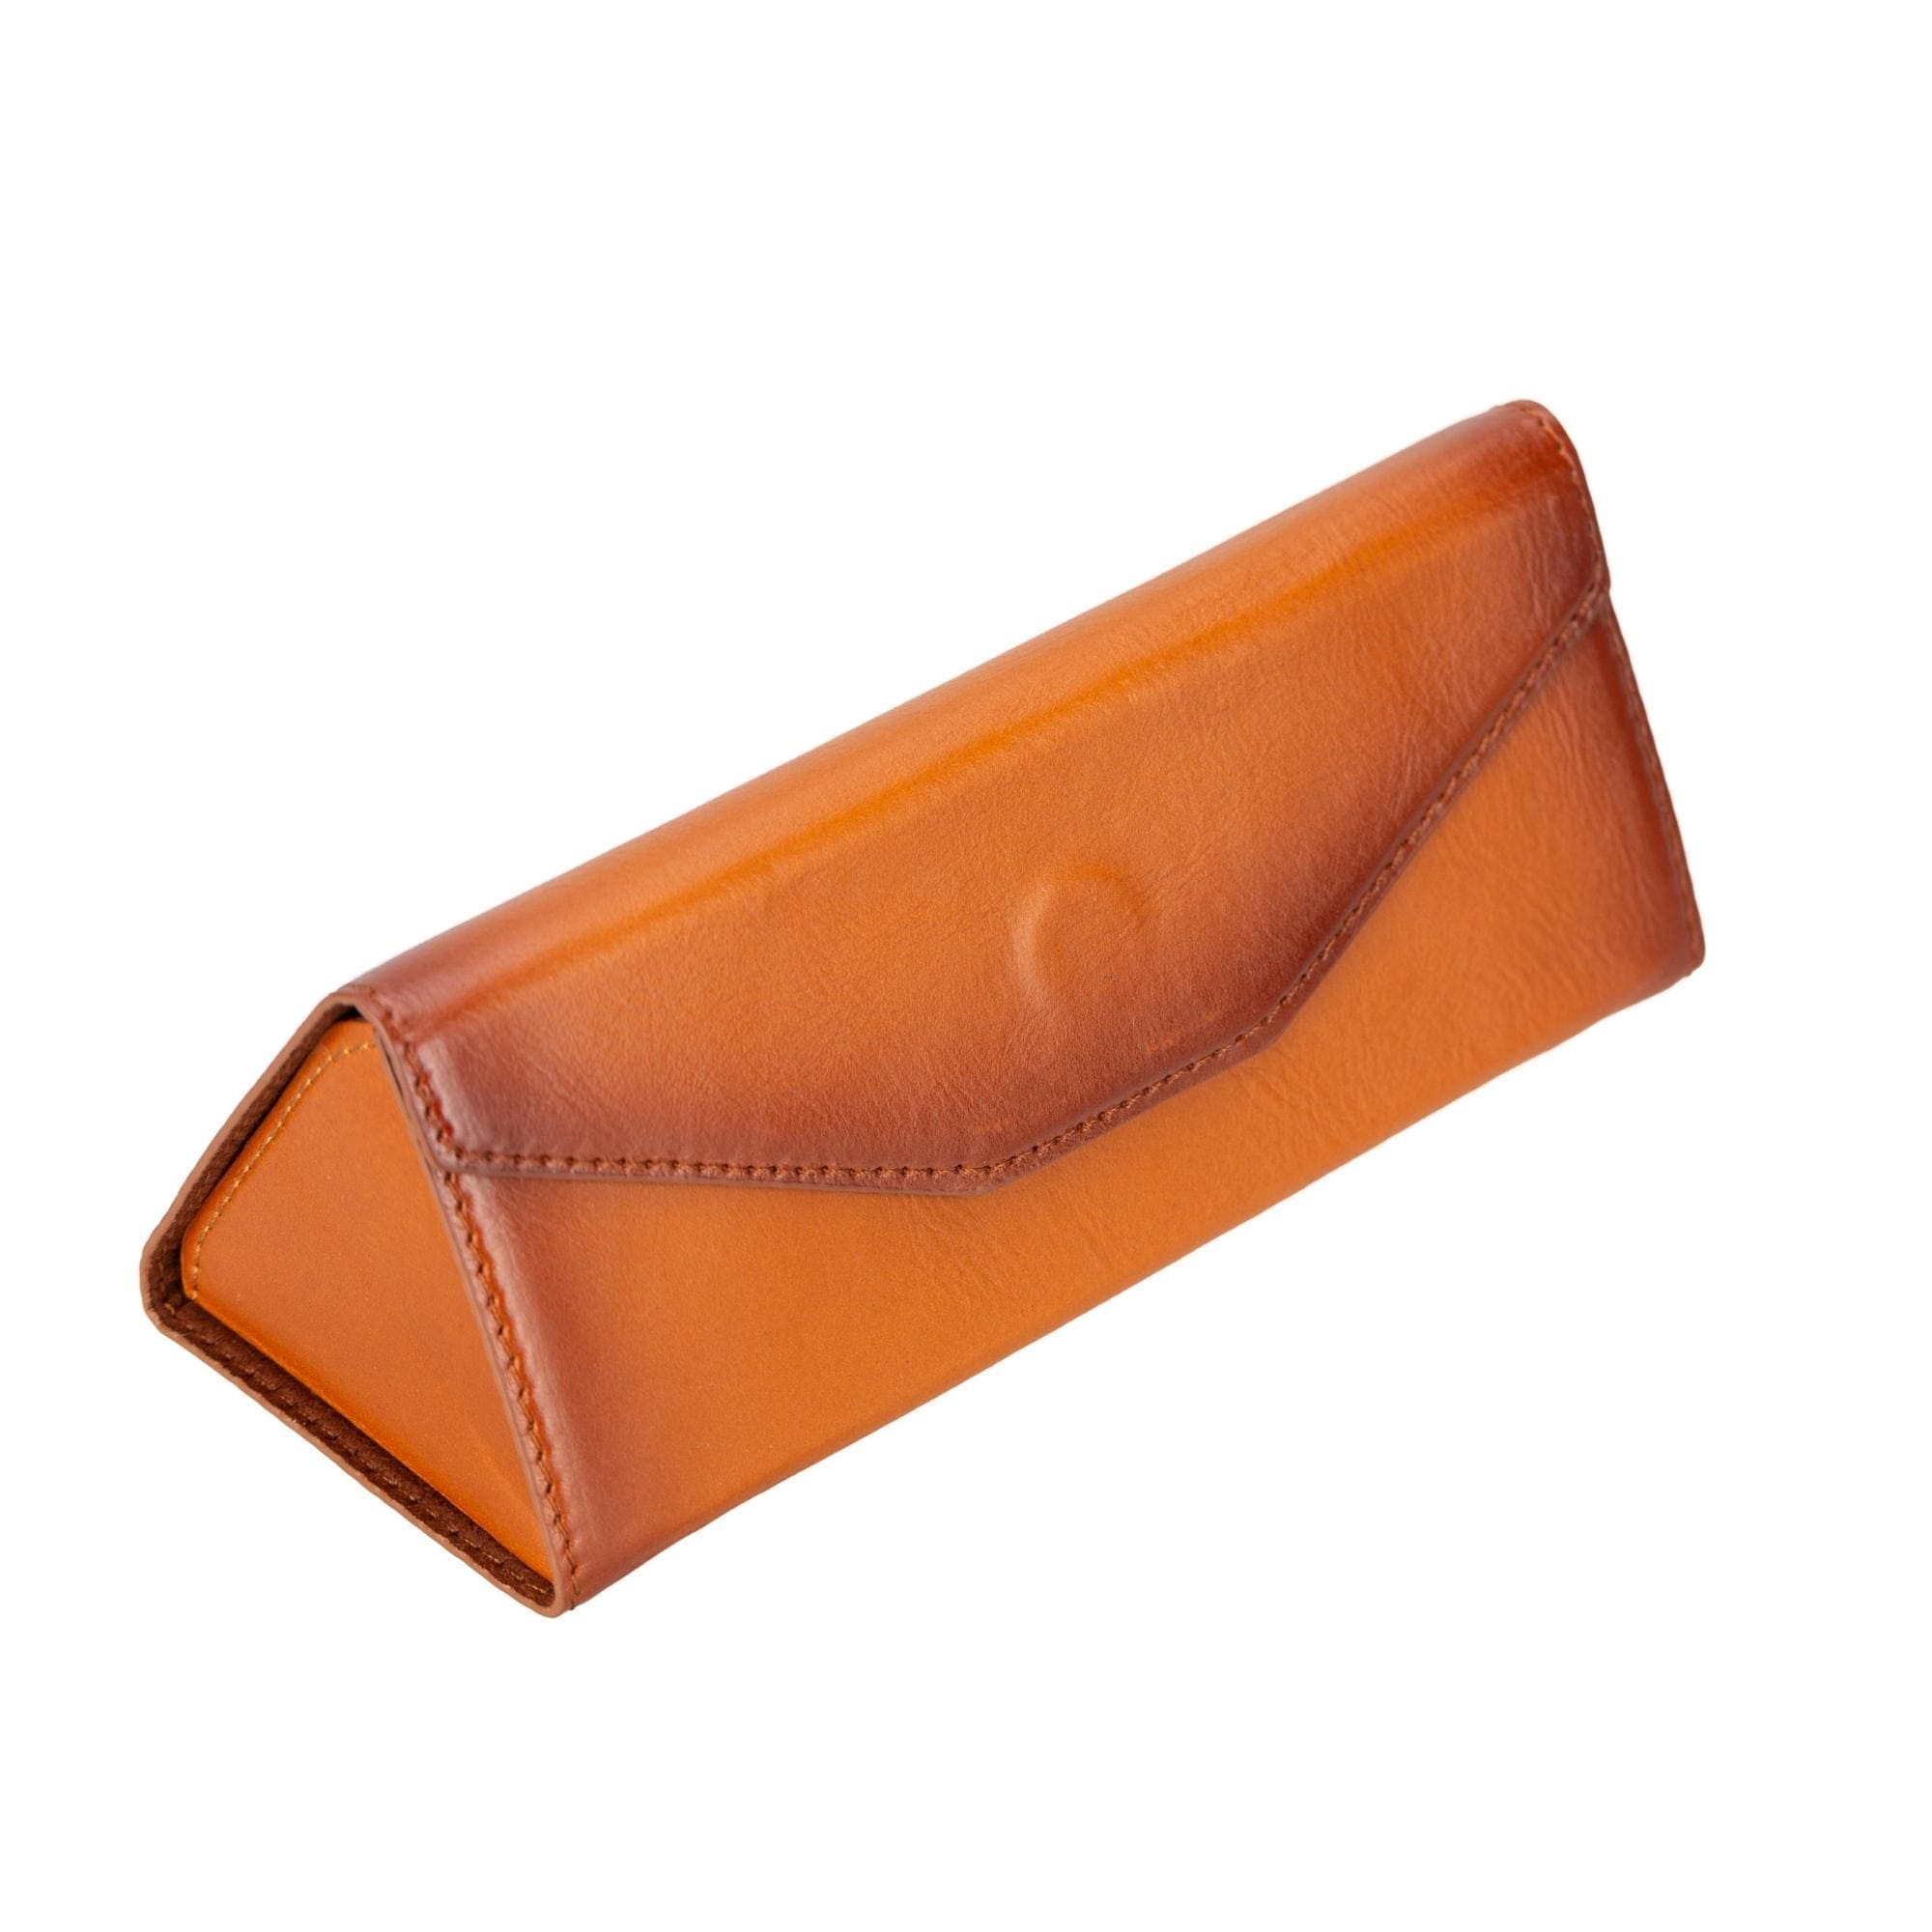 Triangle Leather Cases for Glasses and Sun Glasses - Tan - TORONATA